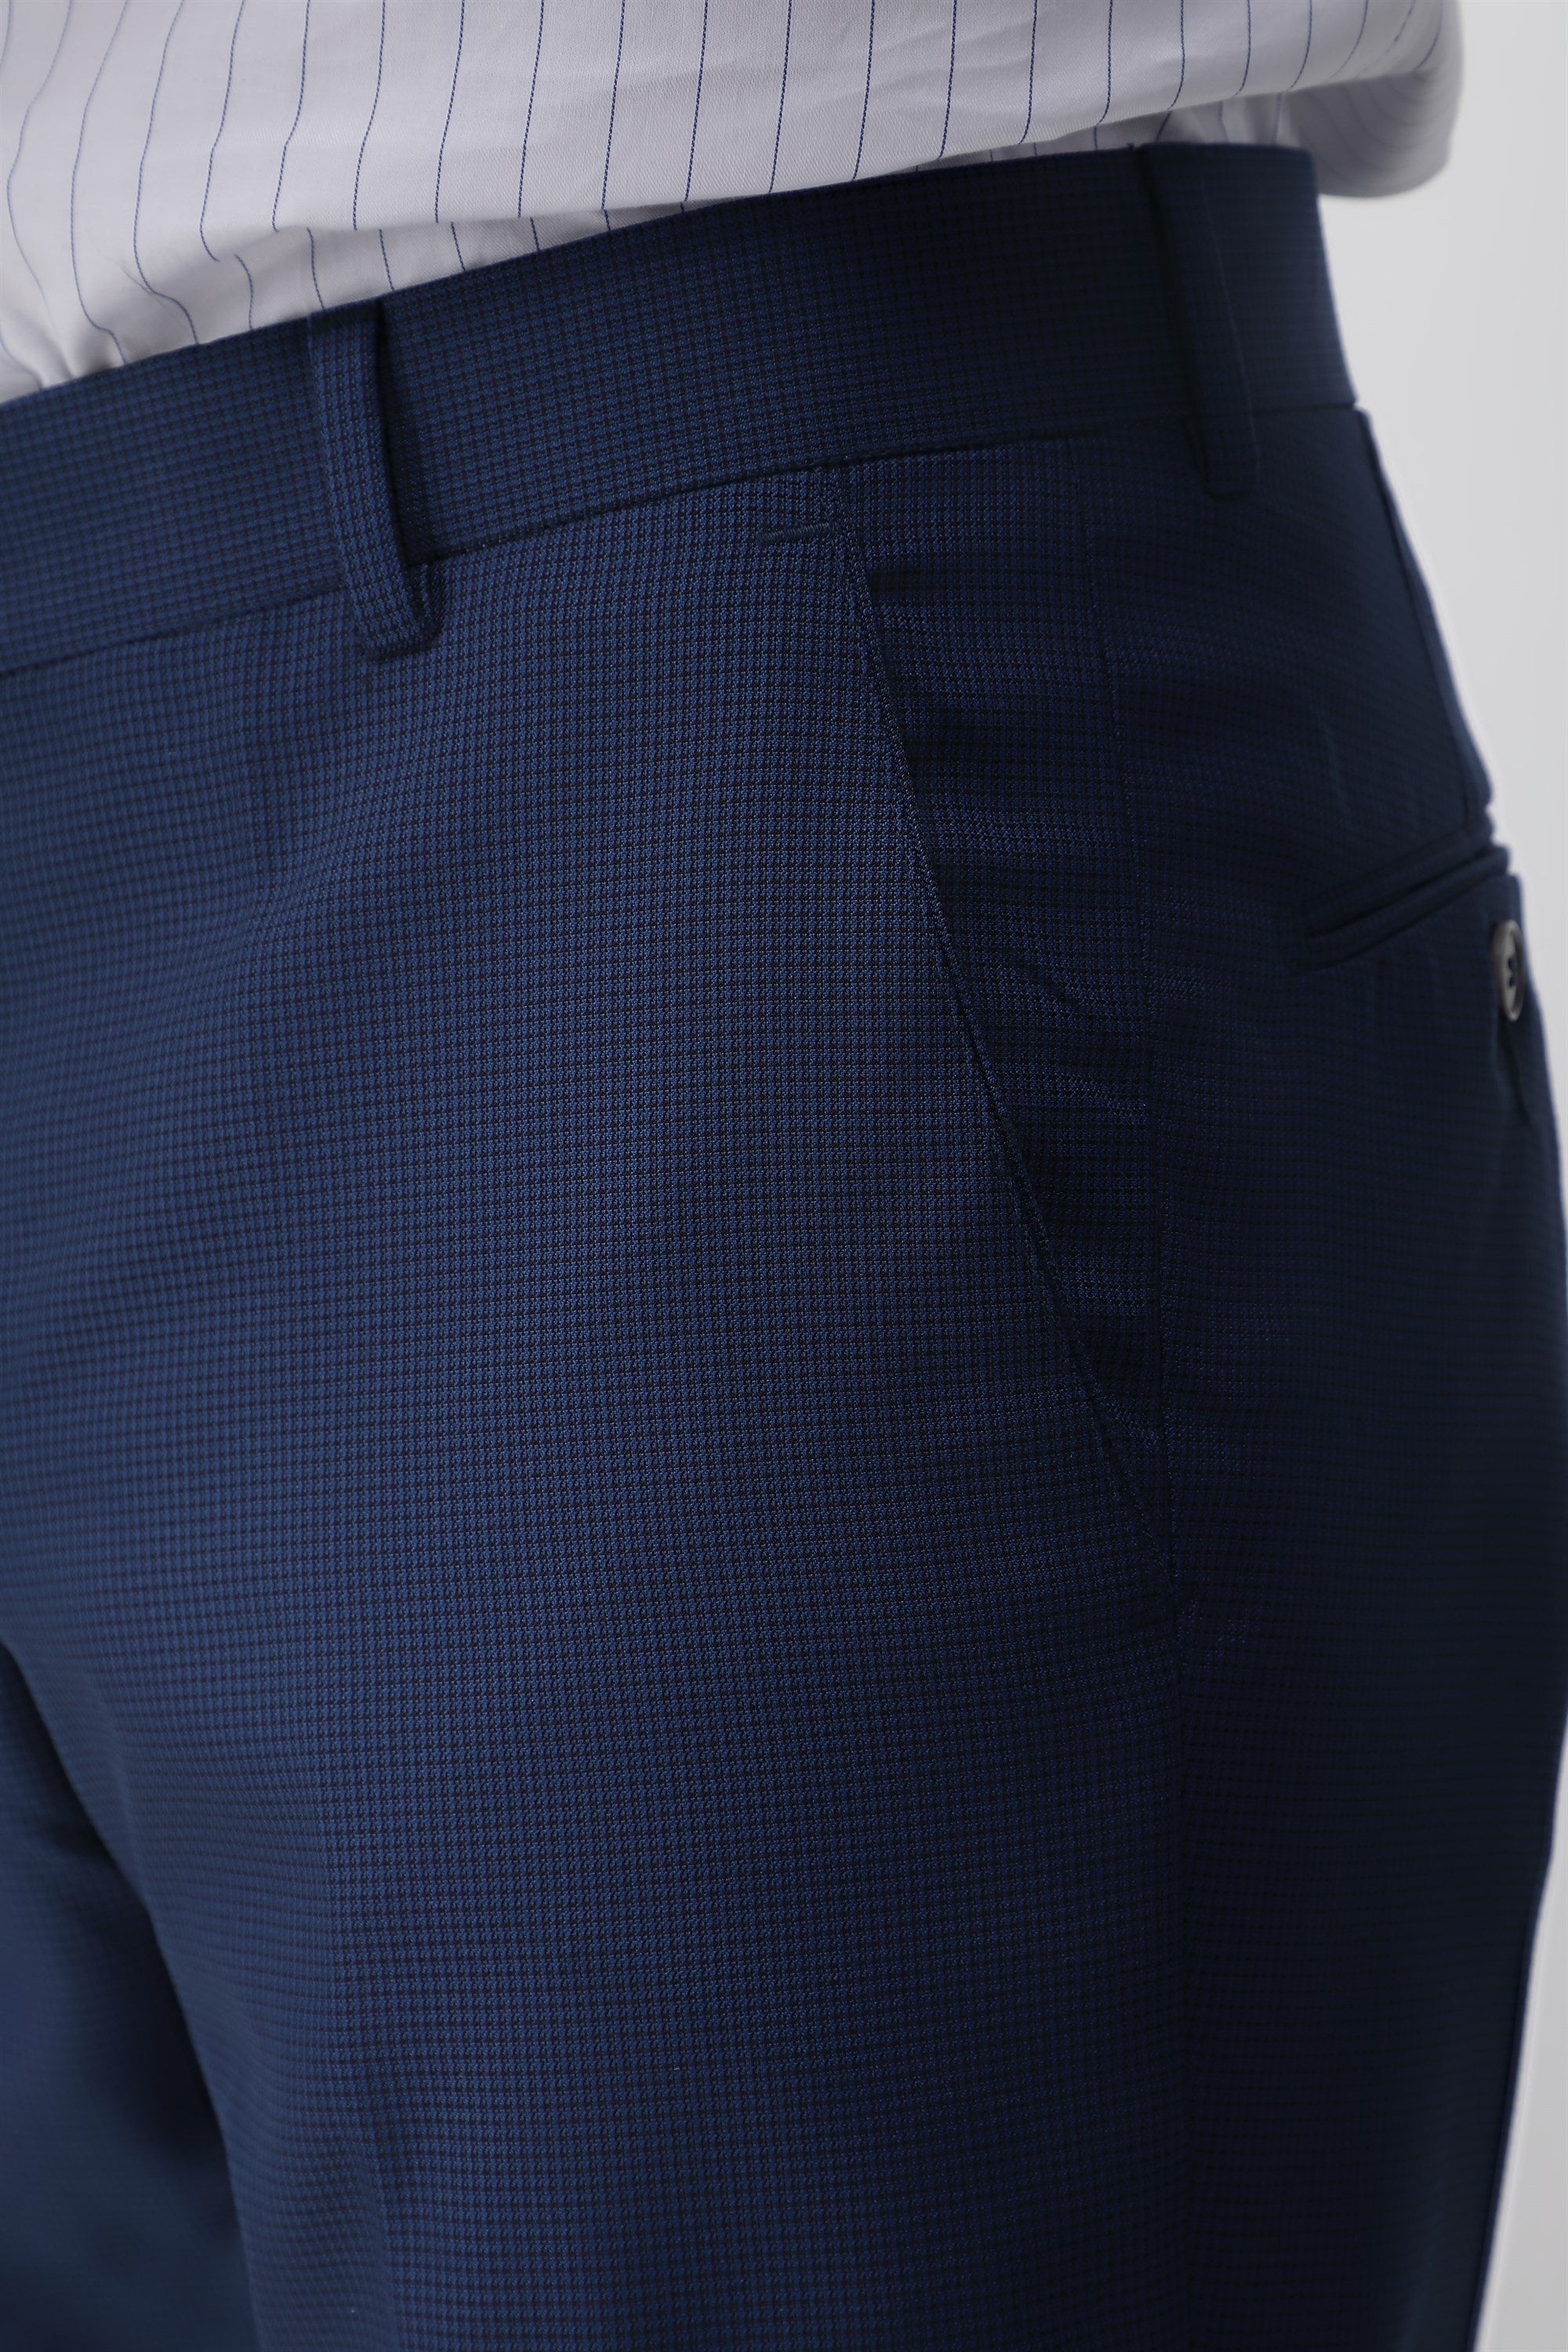 Buy Navy Blue Trousers  Pants for Men by Buda Jeans Co Online  Ajiocom